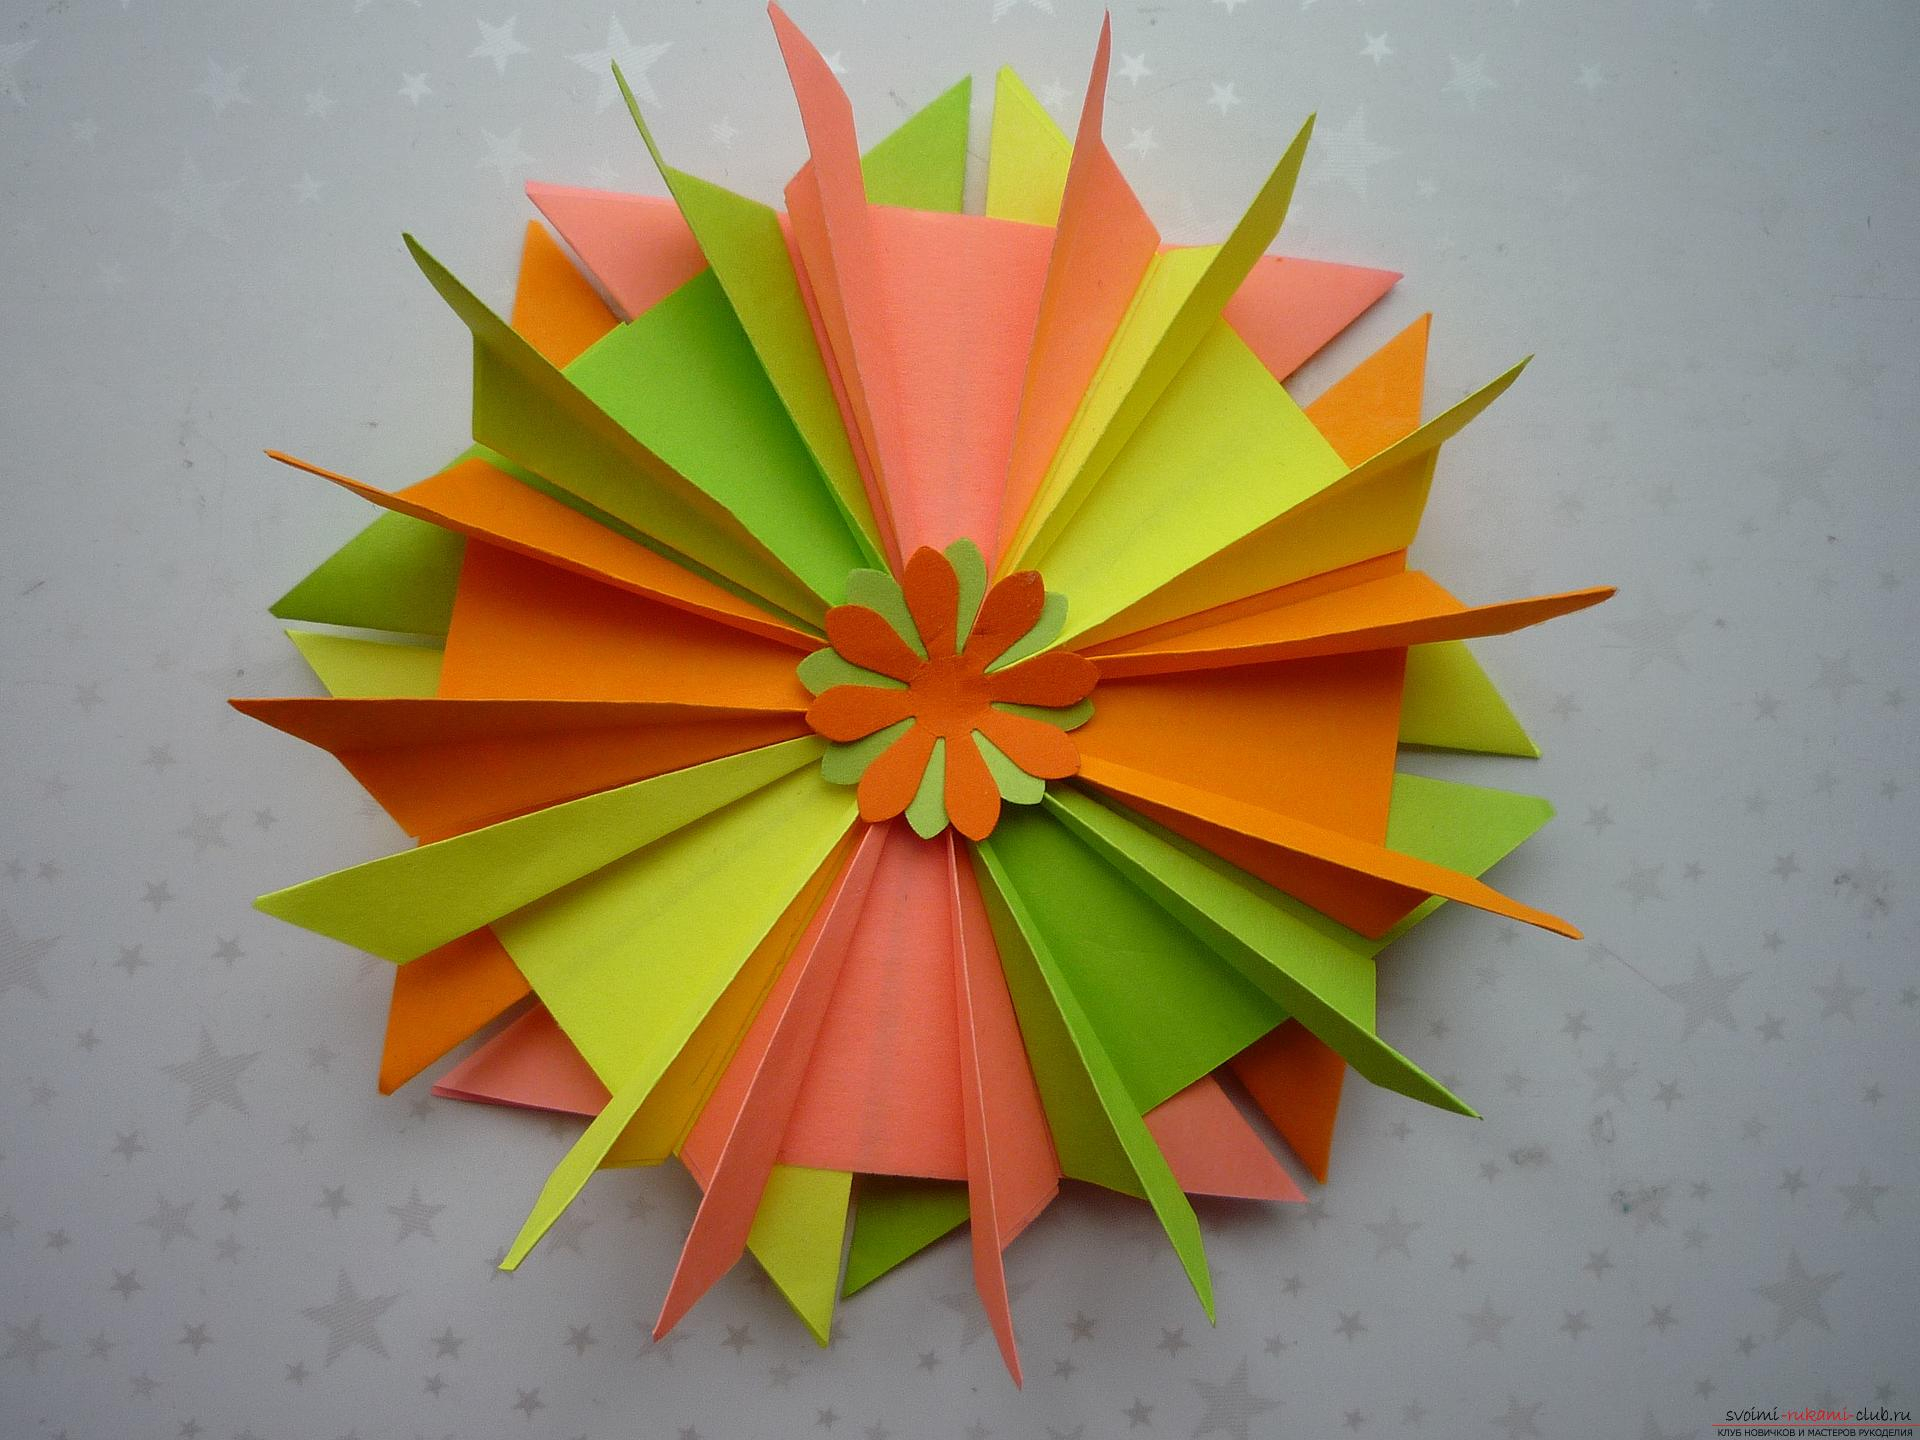 Origami Modular Star Master Class Origami Modular Star